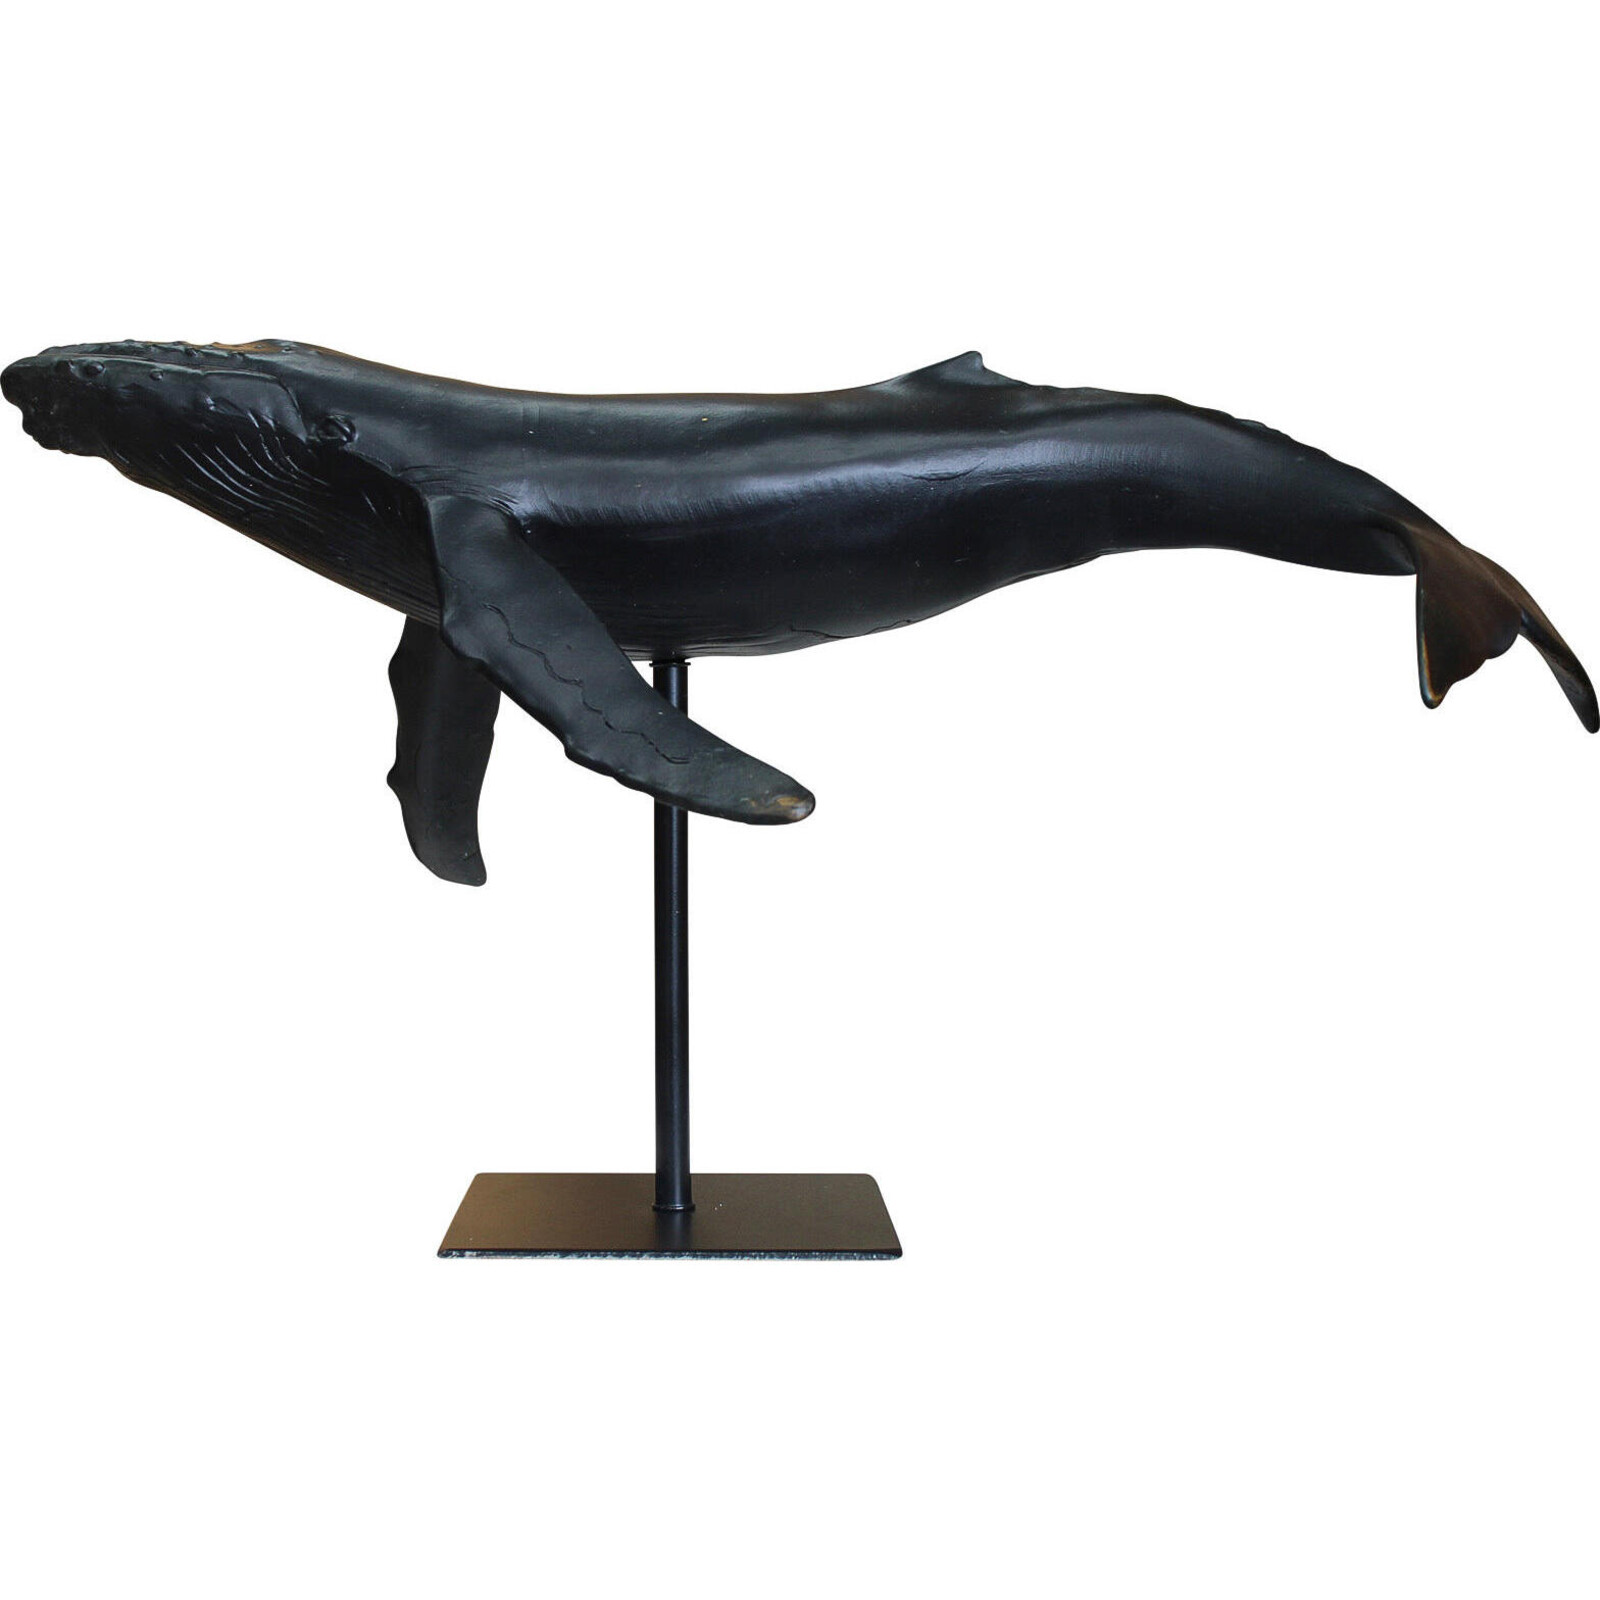 Dark Decorative Whale on Stand